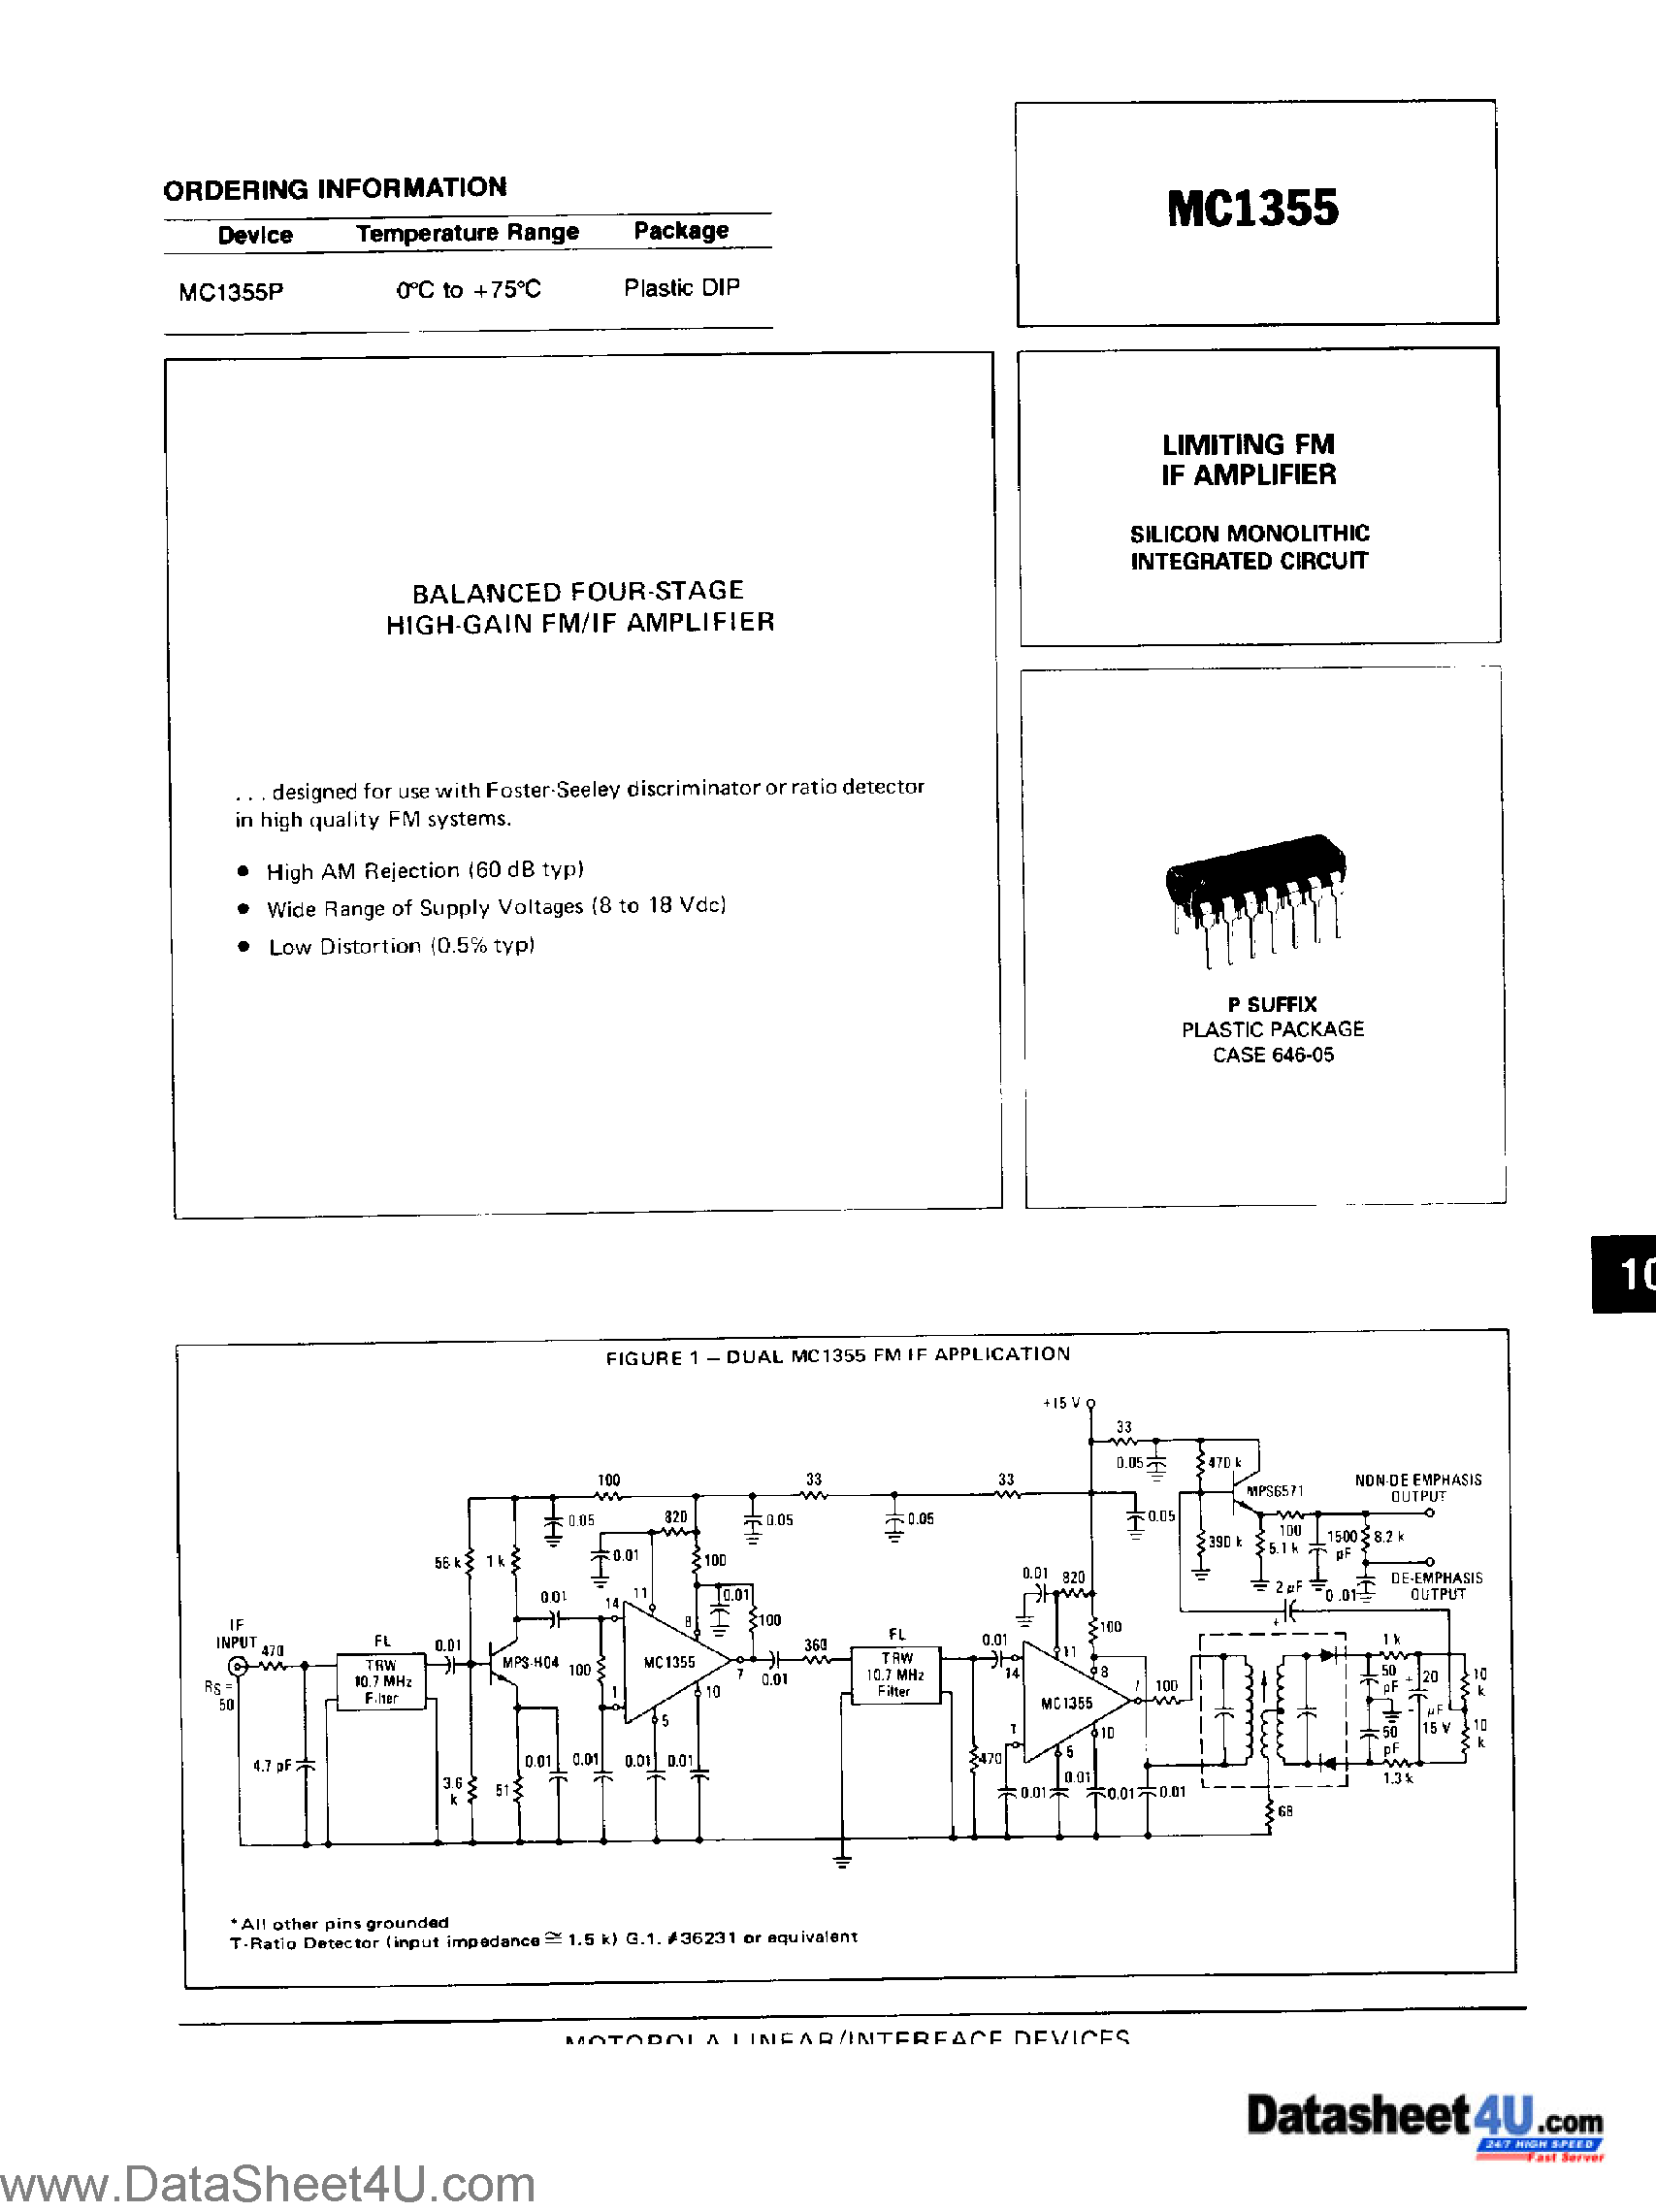 Datasheet MC1355 - Balanced 4-Stage High Gain FM/IF Amplifier page 1